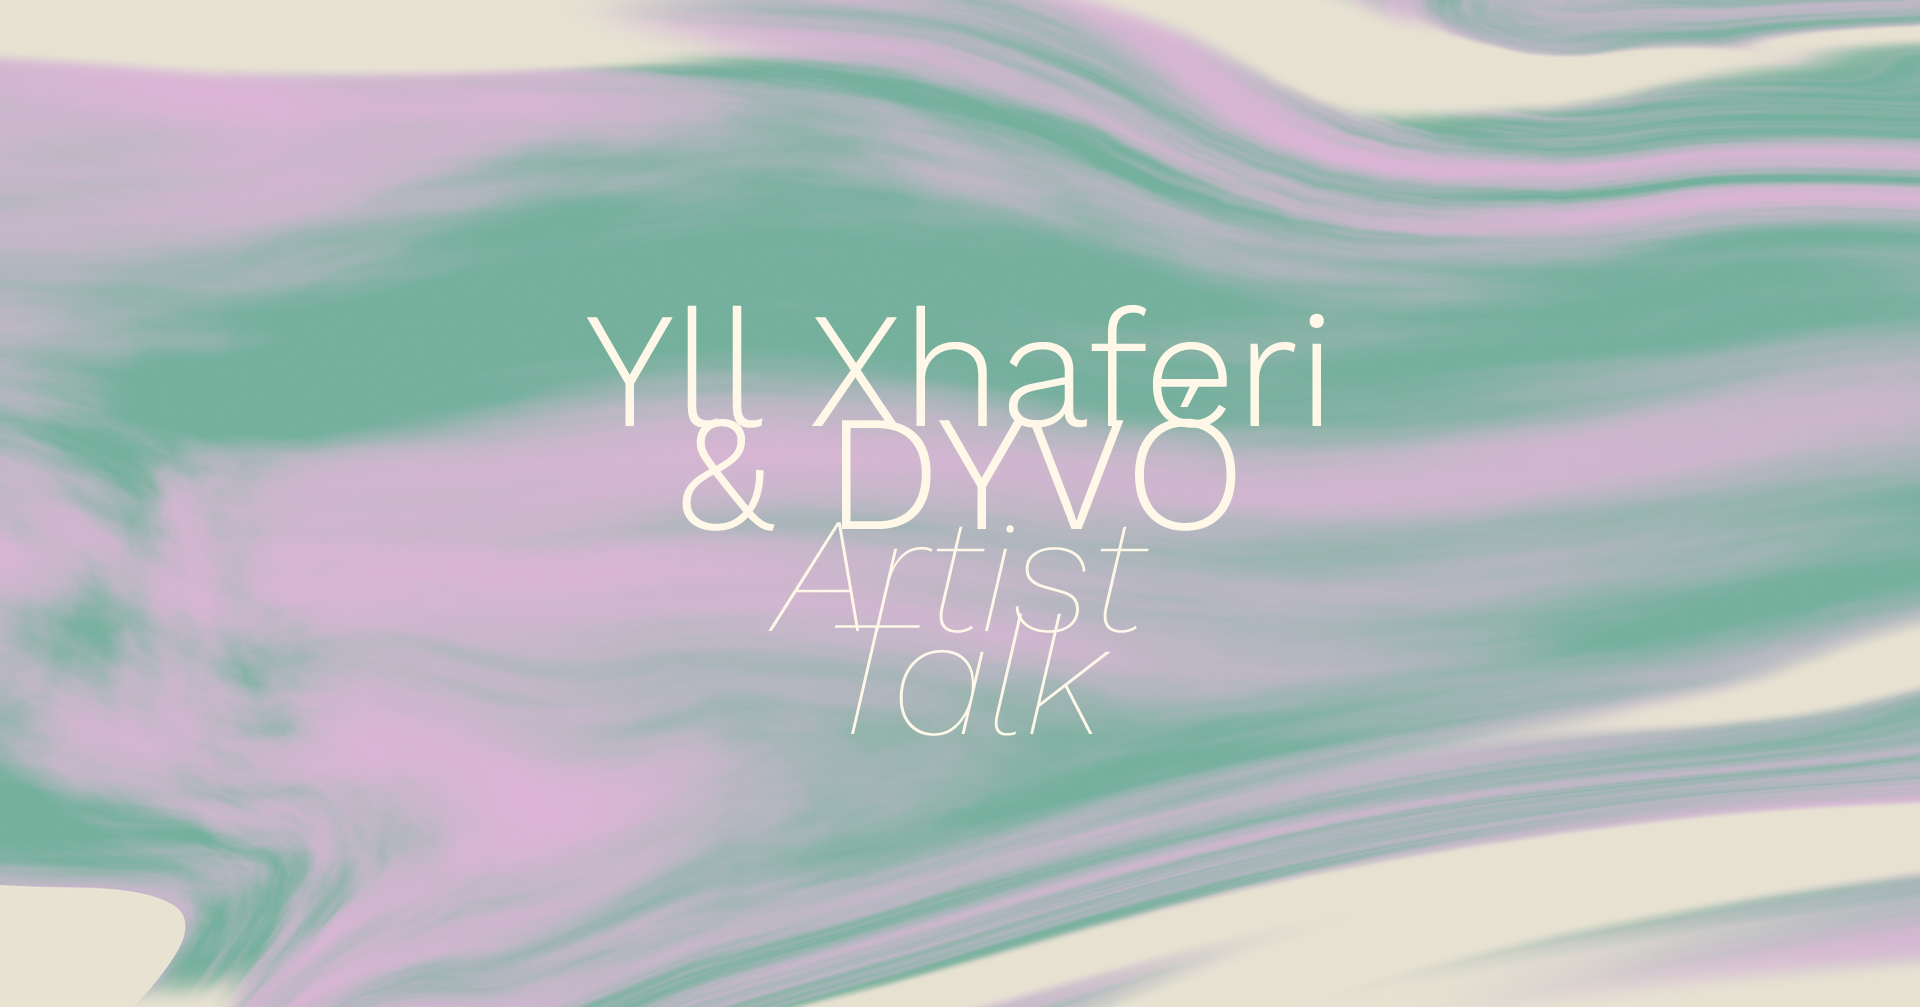 Artist Talk: Yll Xhaferi & DYVÓ